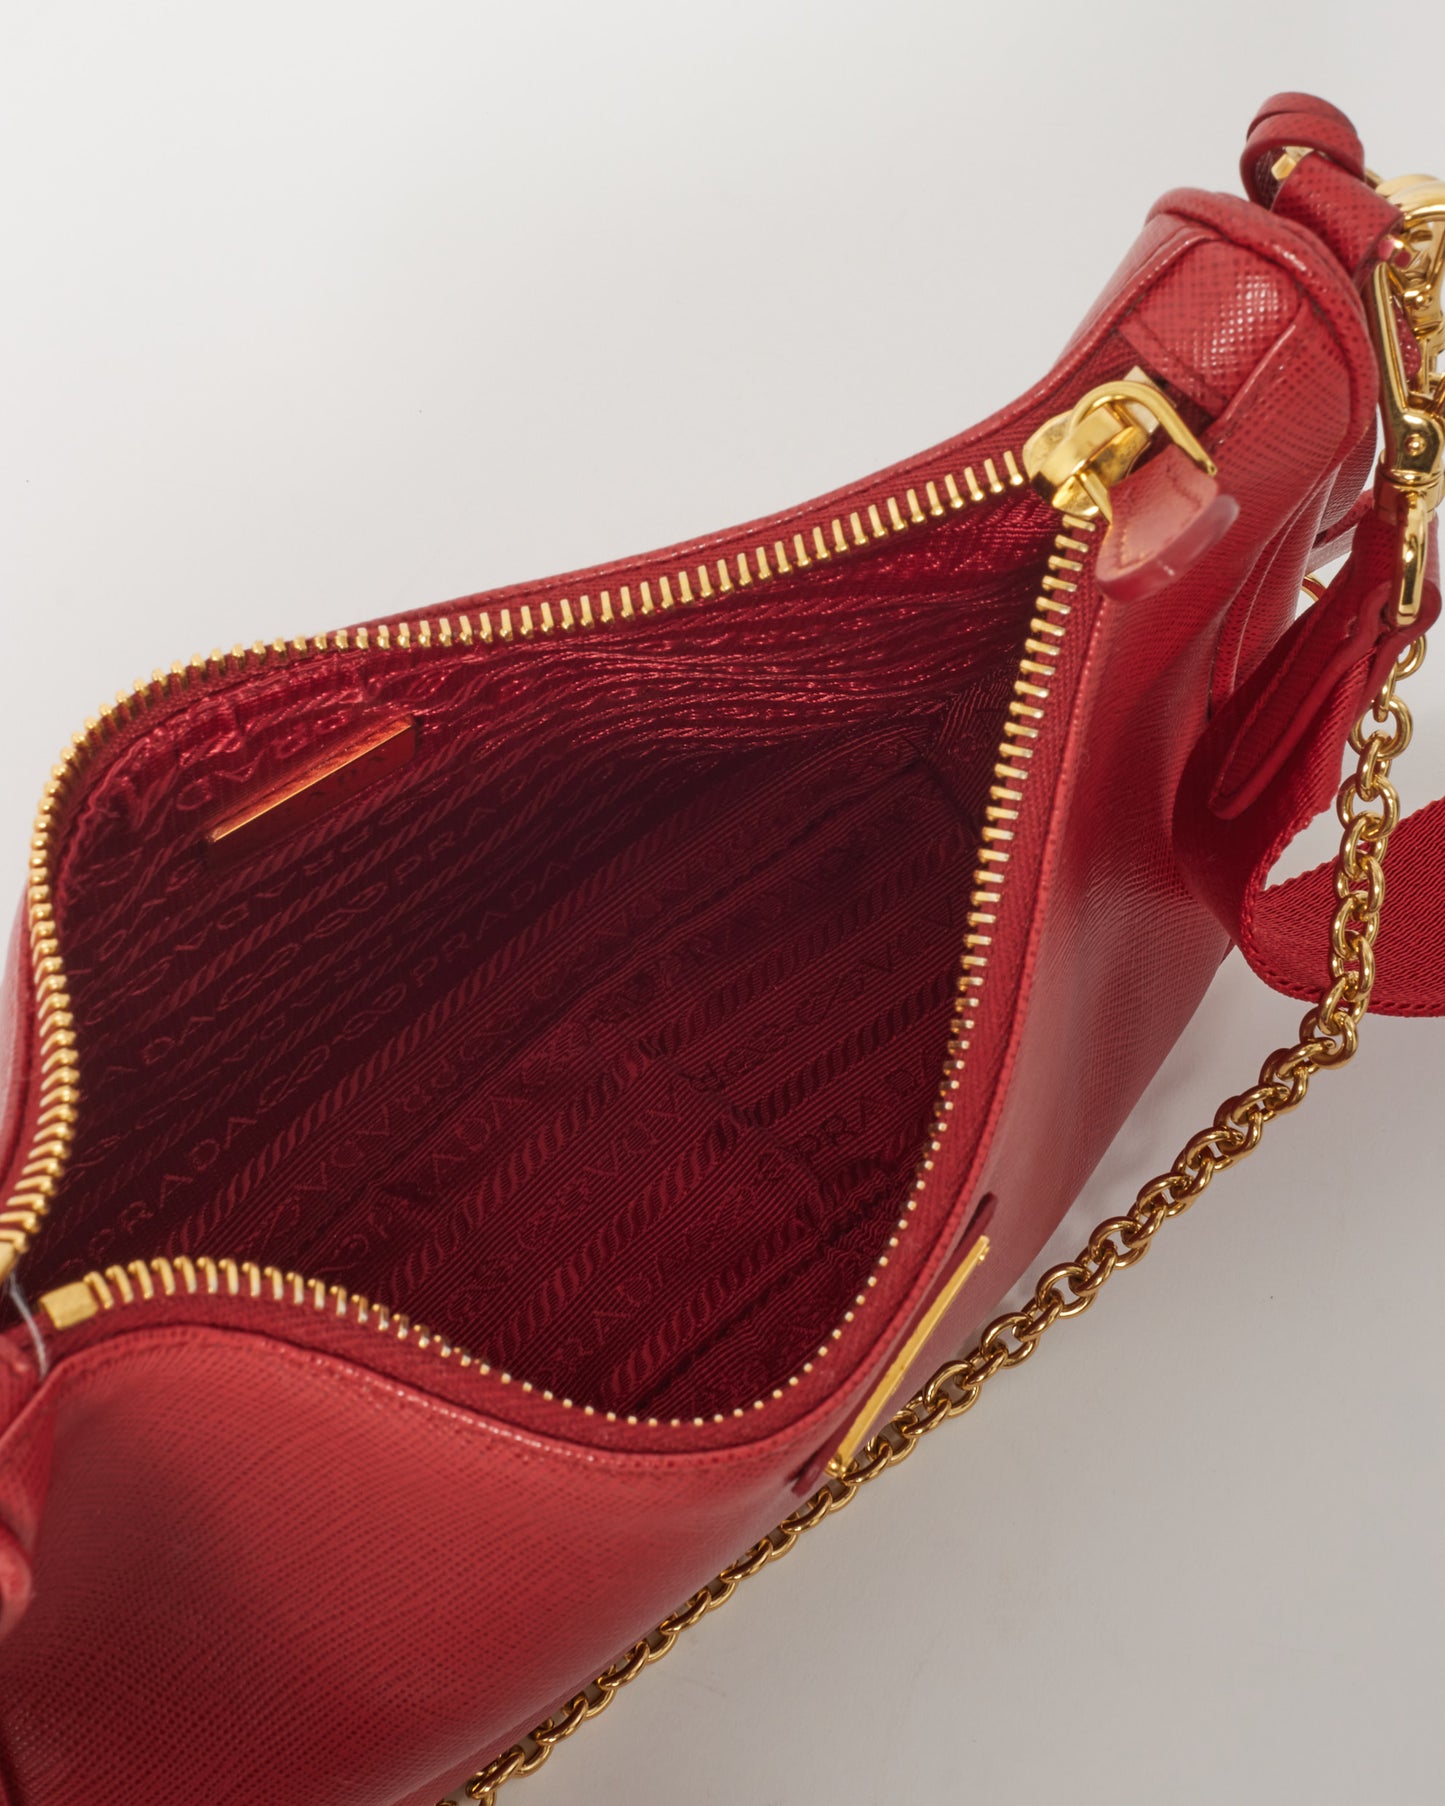 Prada Red Saffiano Leather Re-Edition 2005 Saffiano Bag